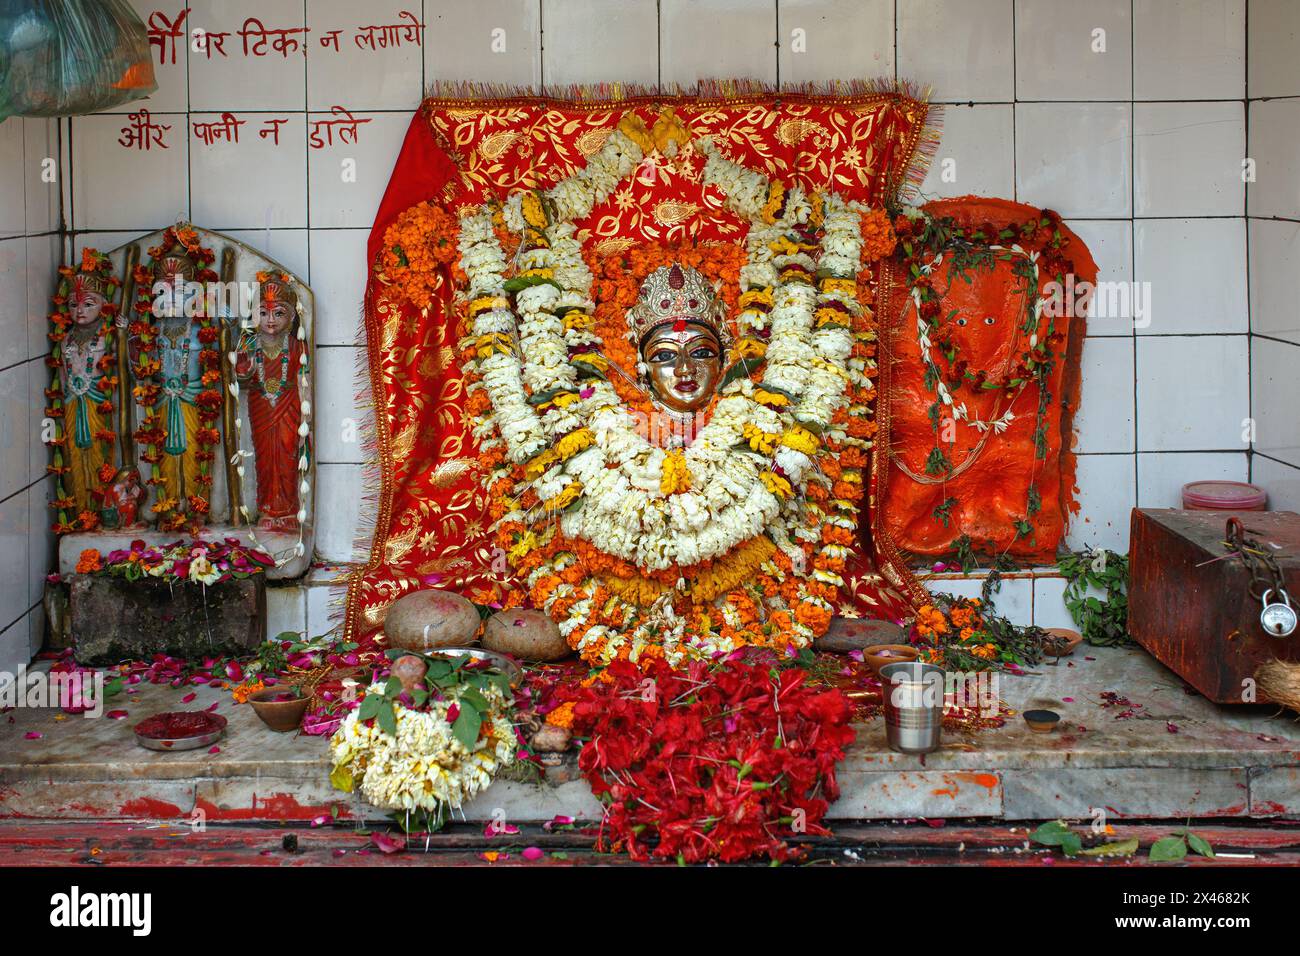 Shrine in Varanasi, India with a goddess icon, a statue of Hanuman and statues of Rama, Sita, and Lakshmana. Stock Photo